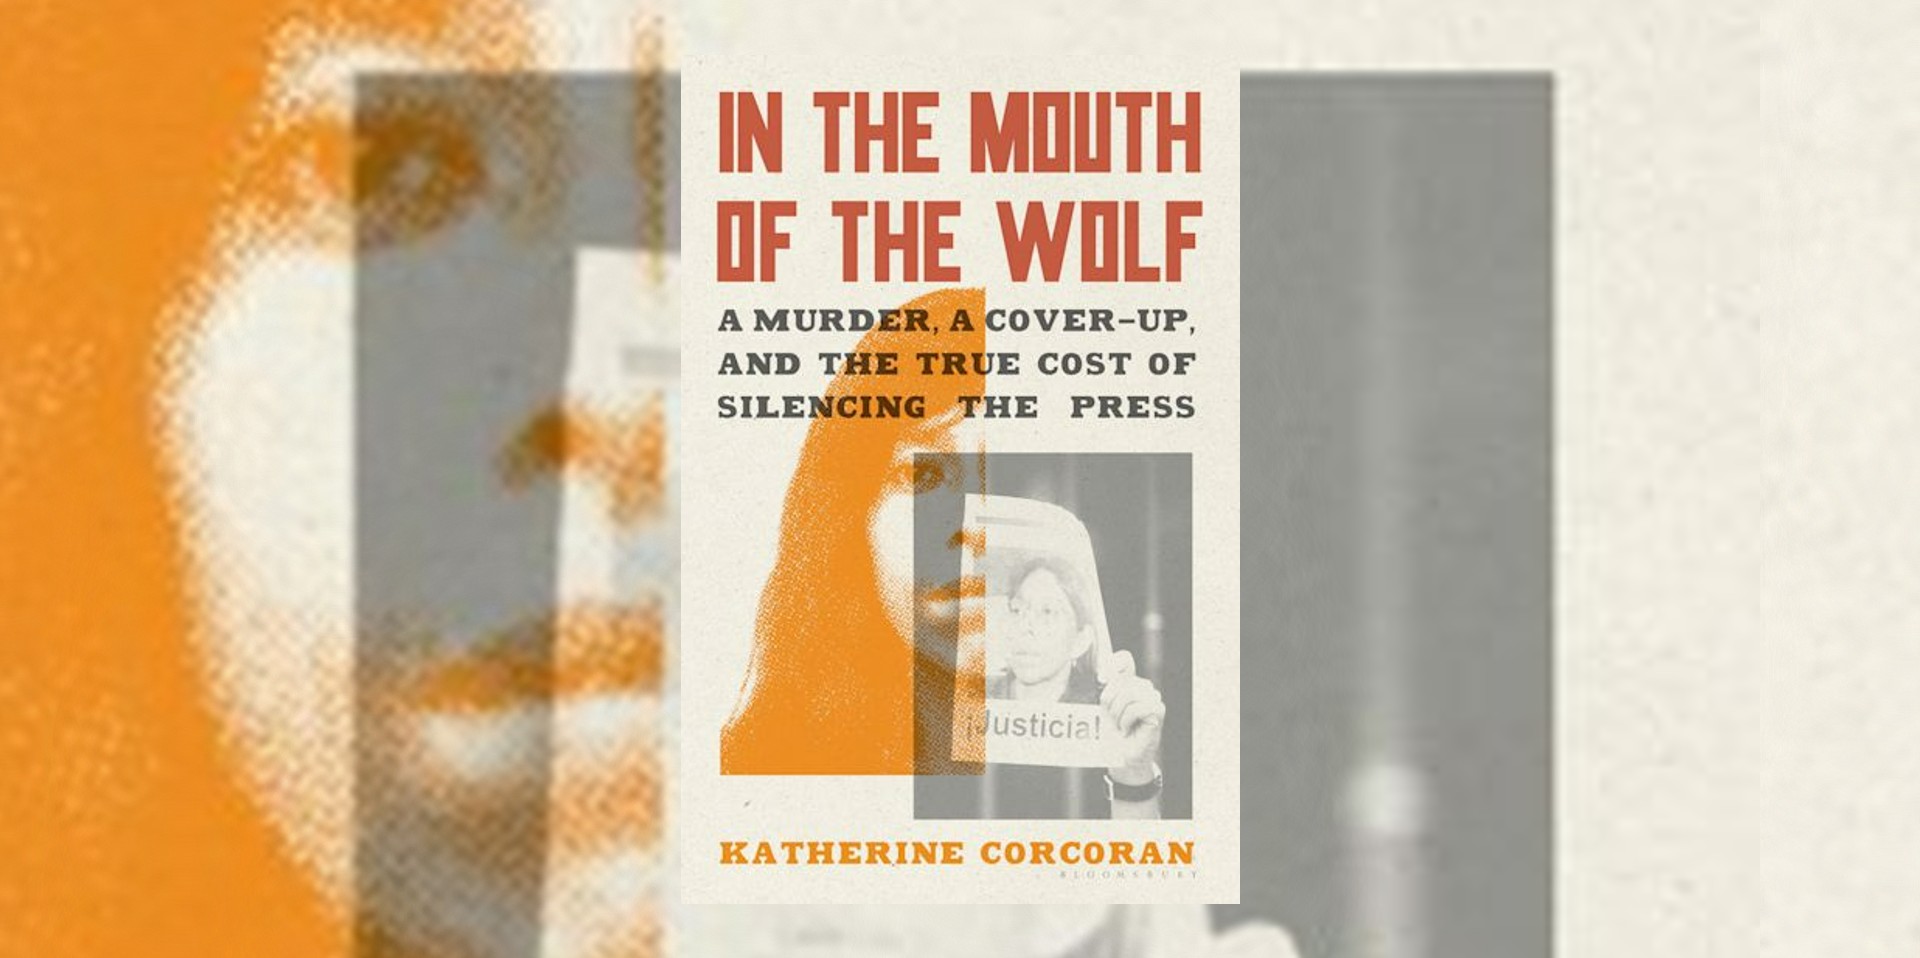 Portada del libro "In the Mouth of the Wolf", de la periodista Katherine Corcoran. (Bloomsbury).